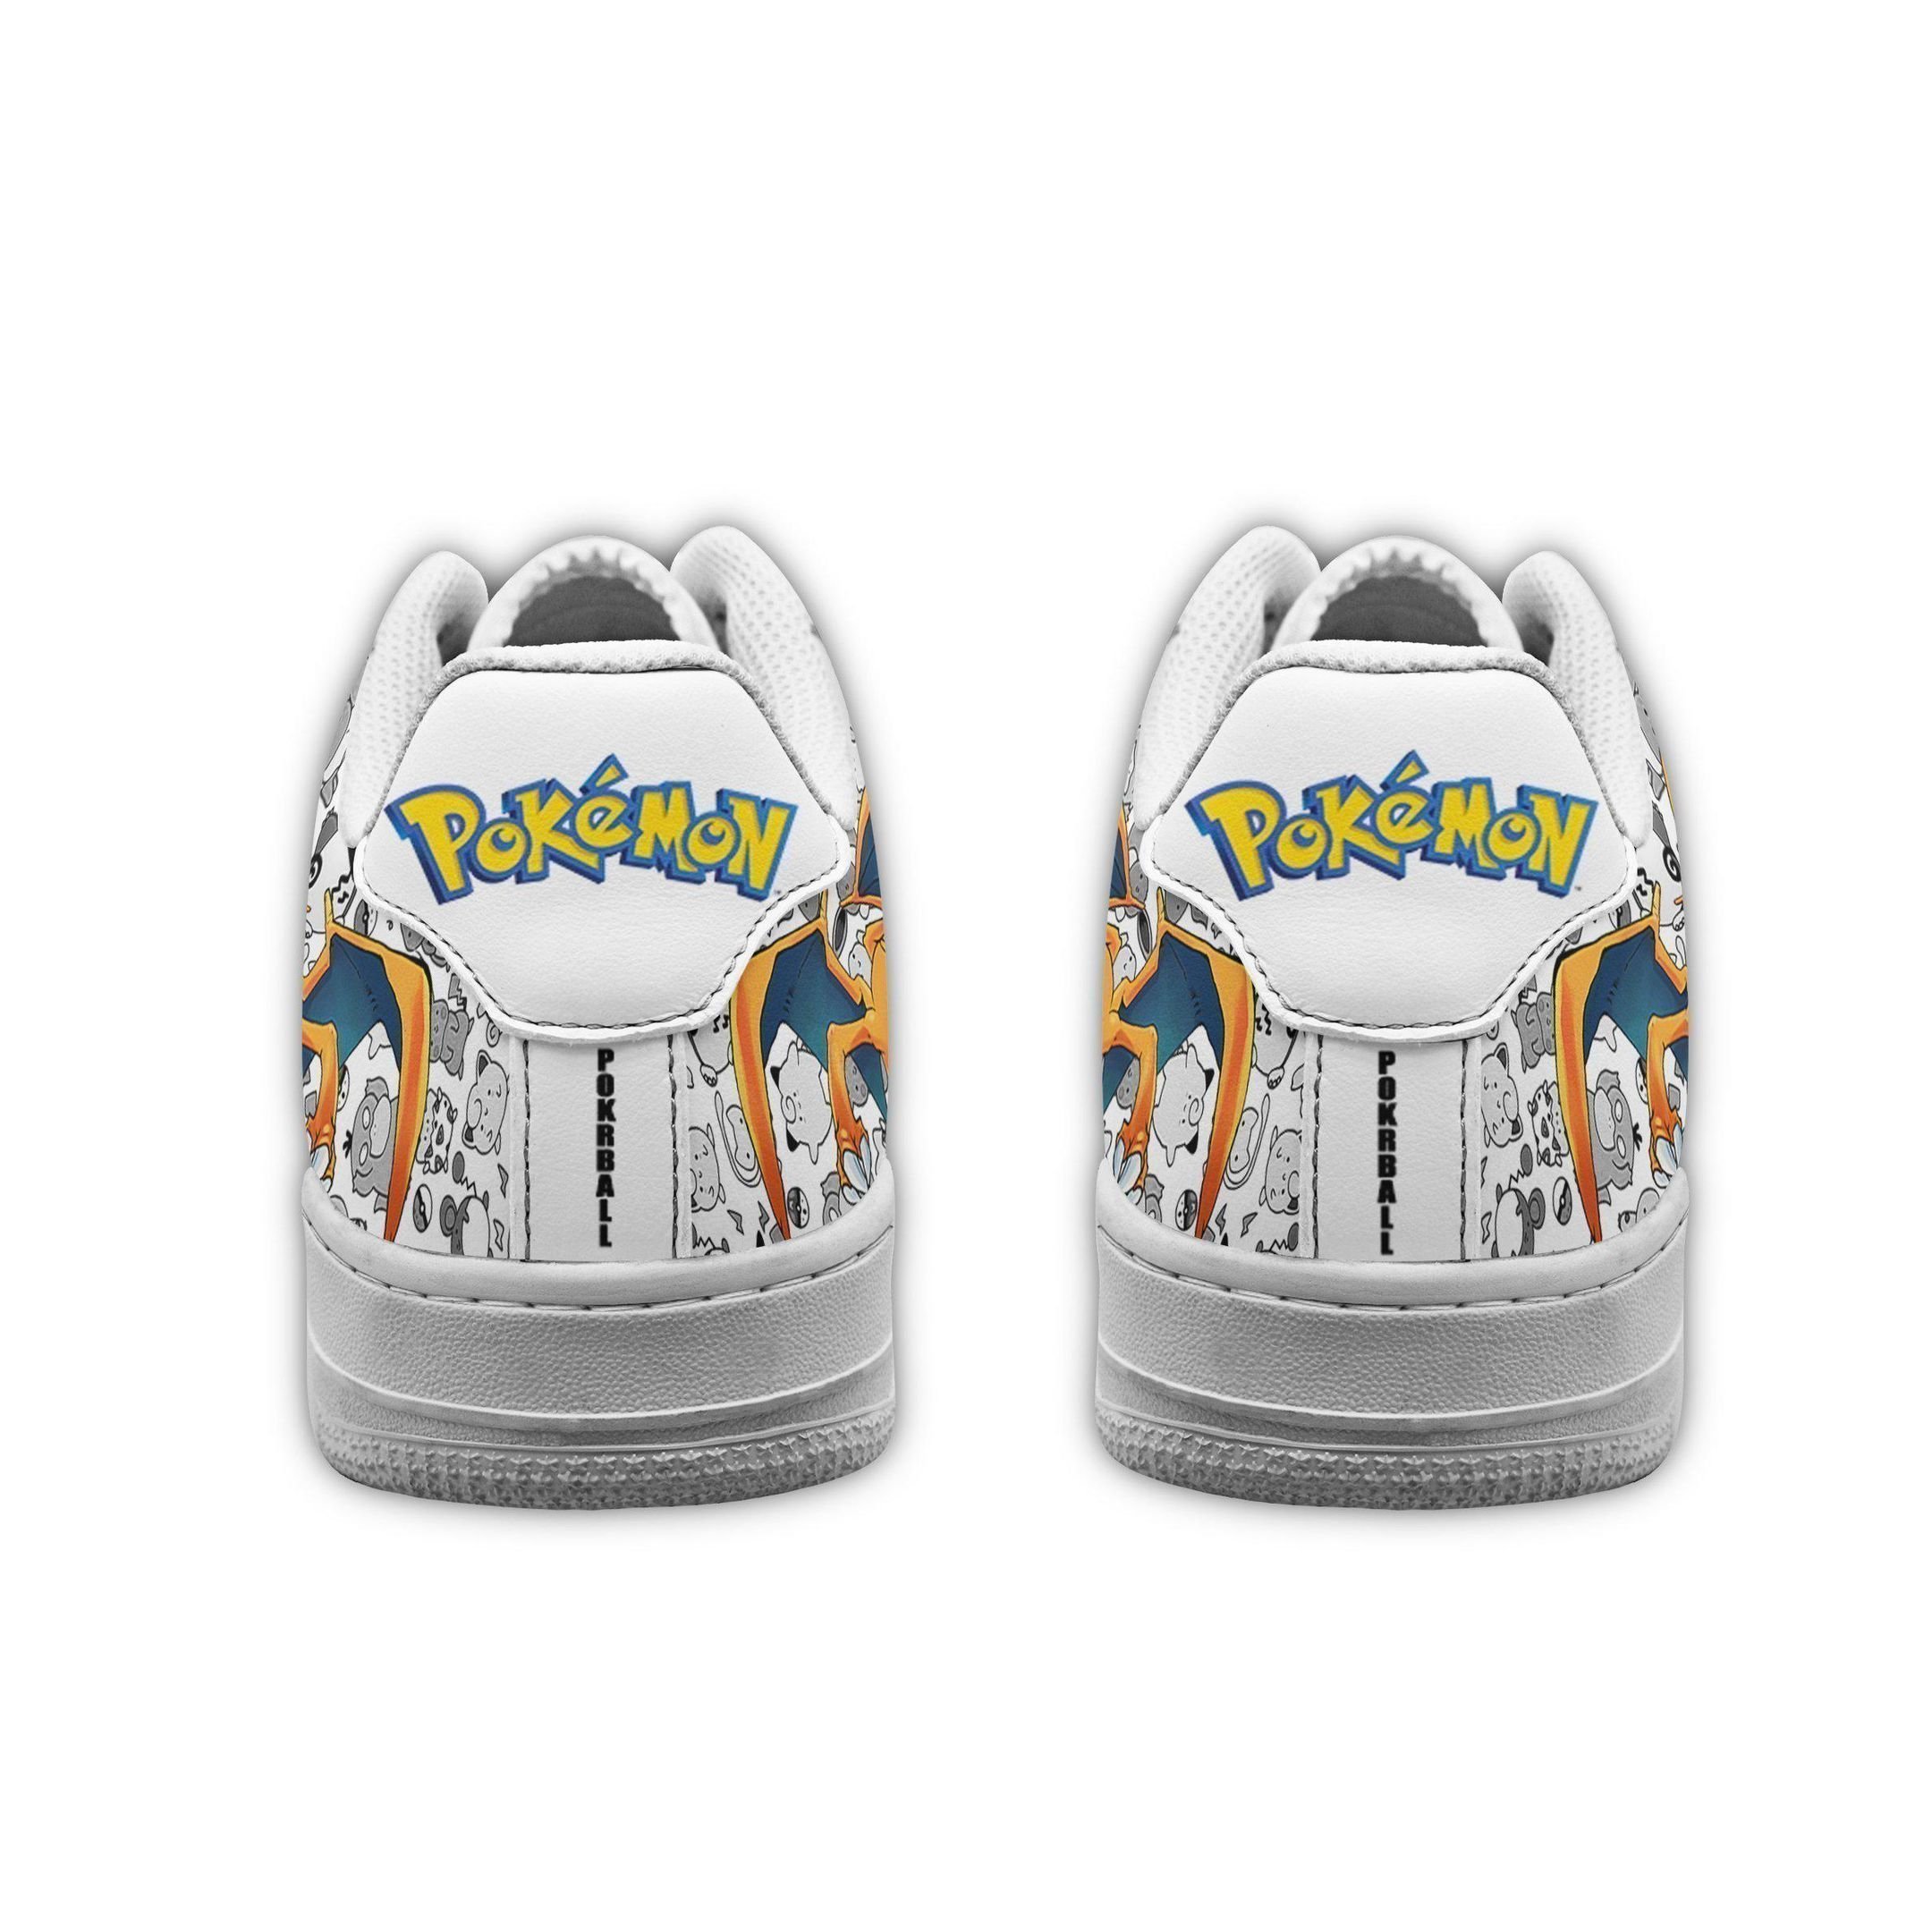 Charizard Air Shoes Pokemon Shoes Fan Gift Idea GO1012